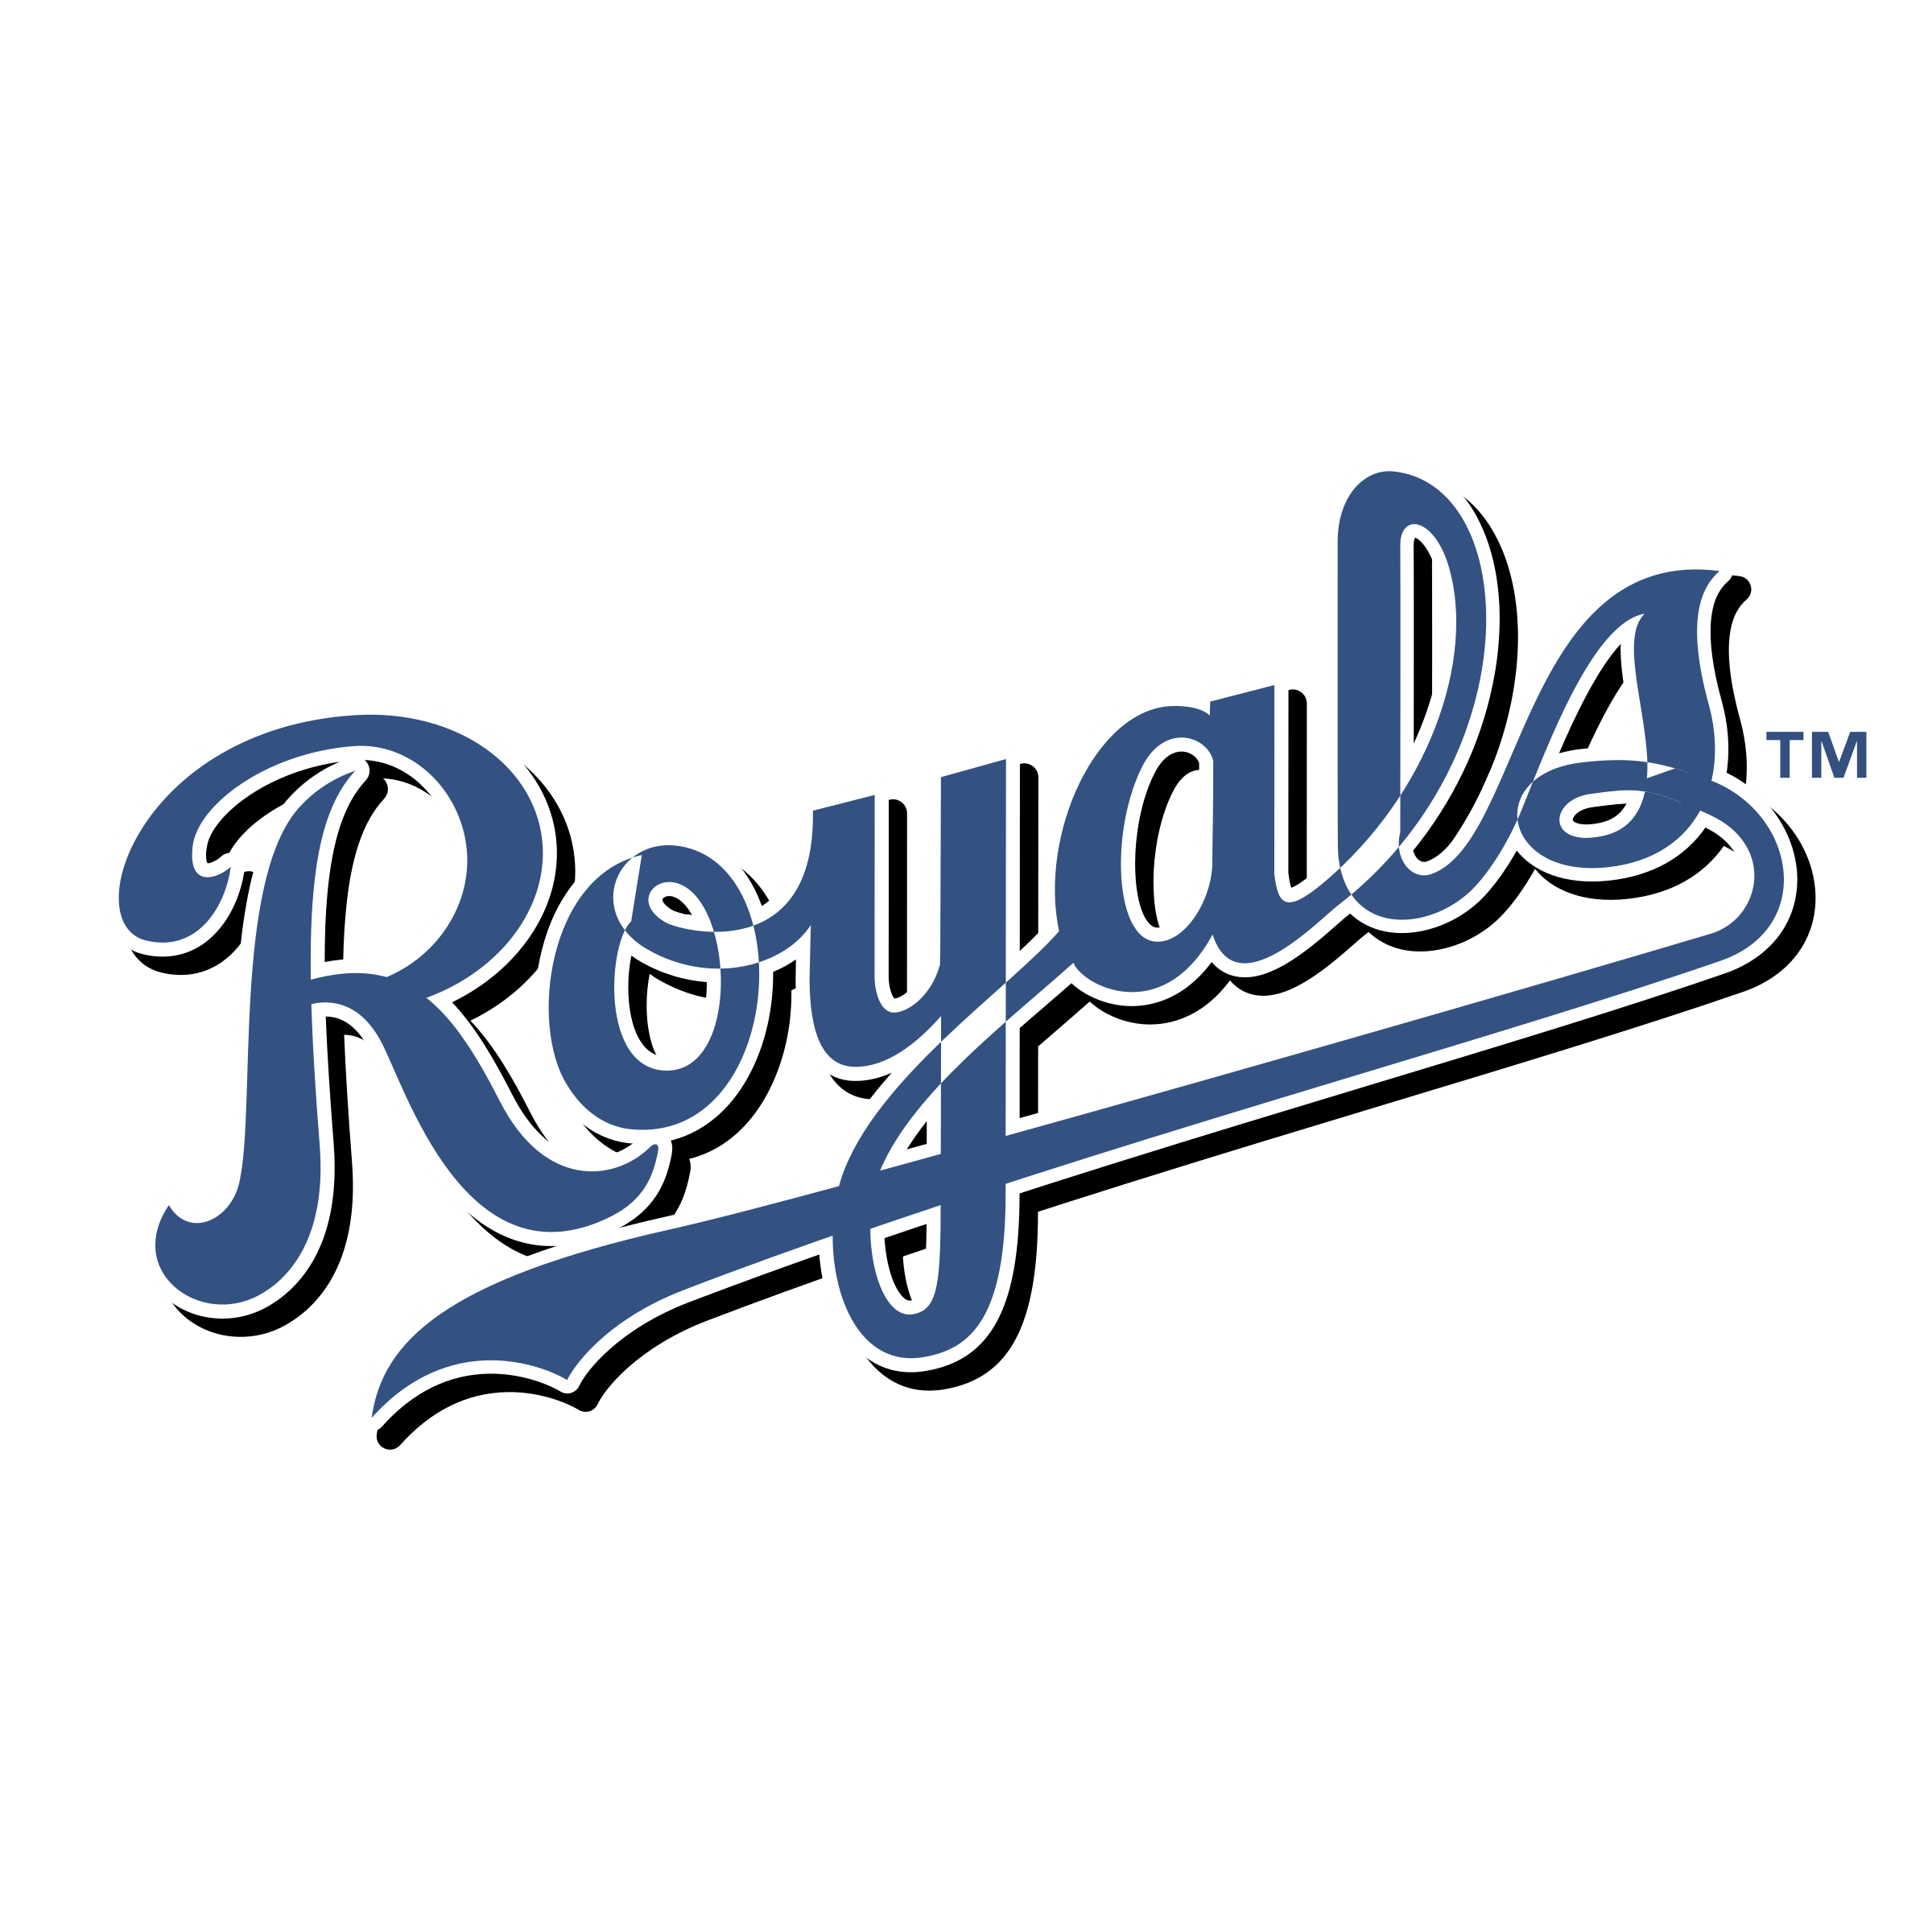 Transparent Royals Logo - Kansas City Royals 6 Logo SVG Vector & PNG Transparent - Vector Logo ...